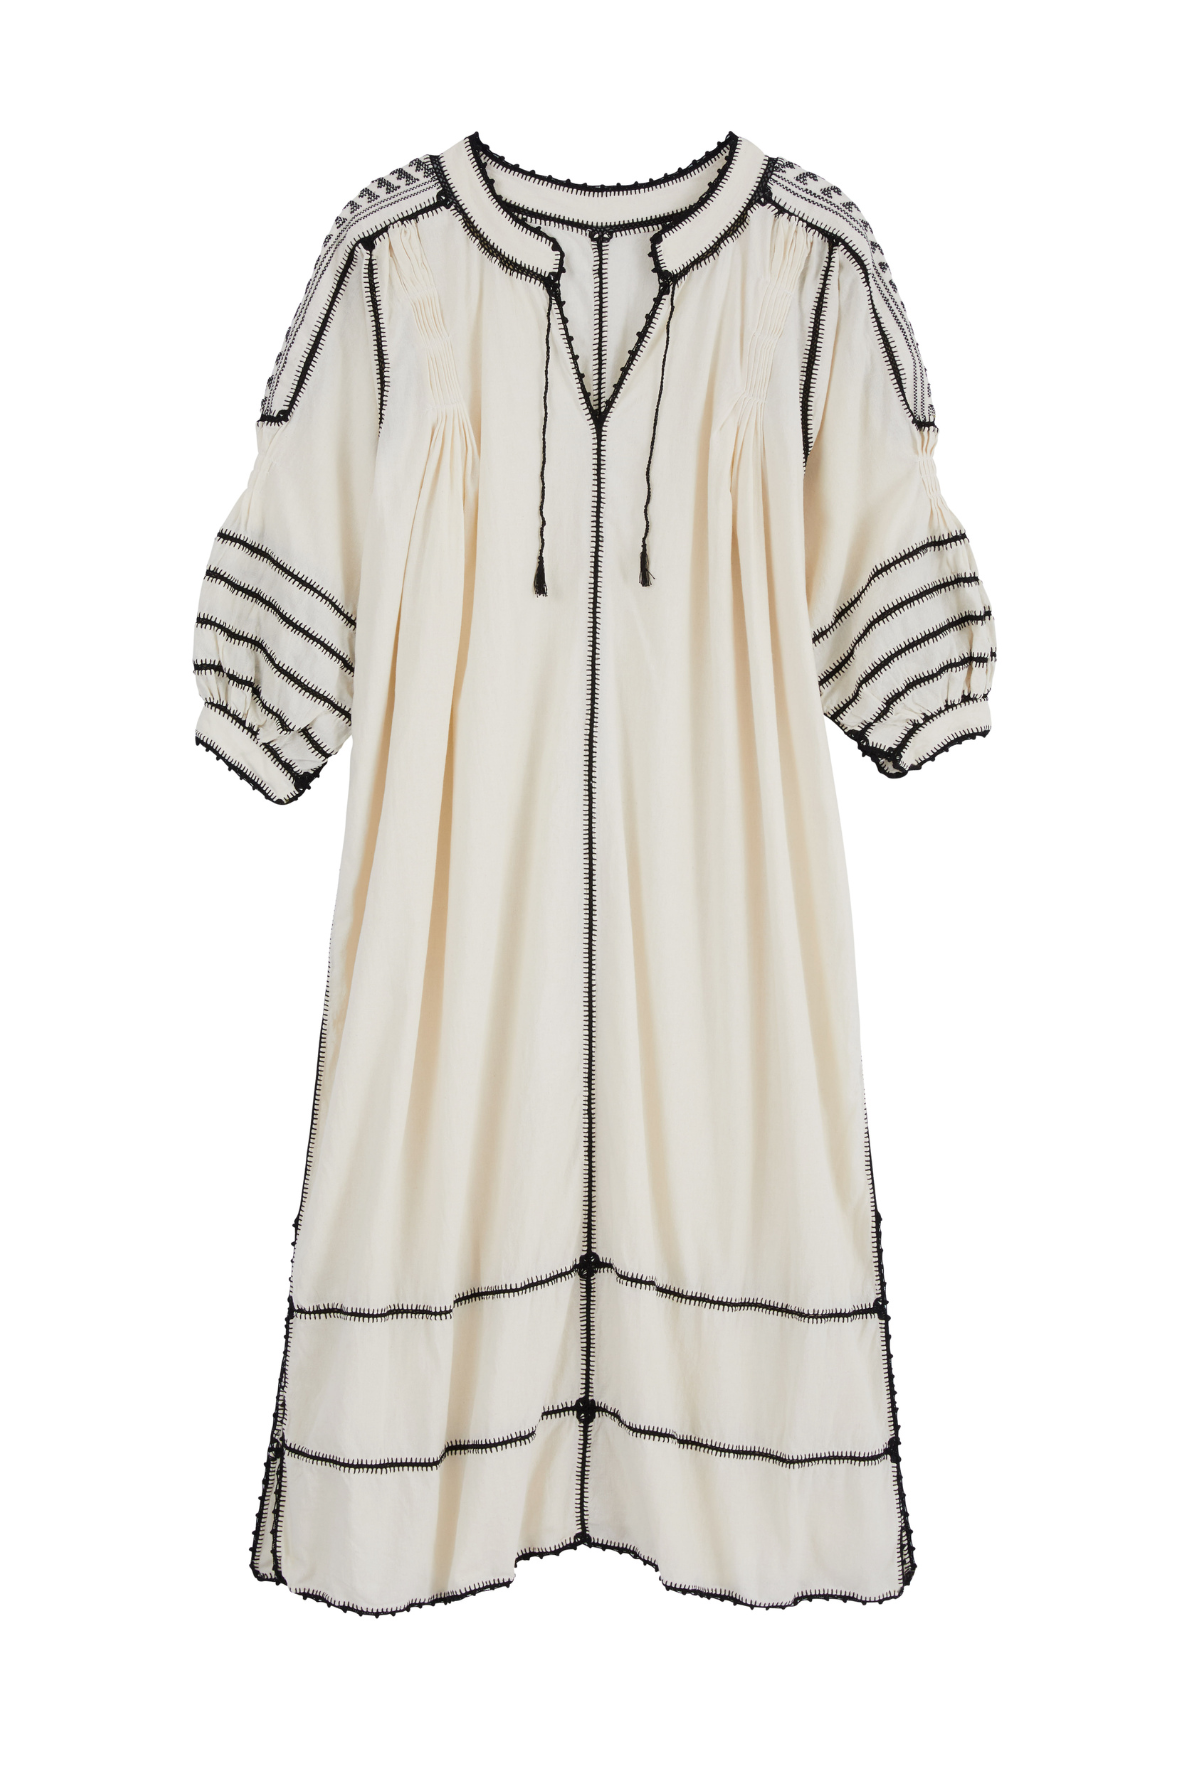 Amorcita Mexican Dress - Long Sleeve - Ivory, Black by Larkin Lane